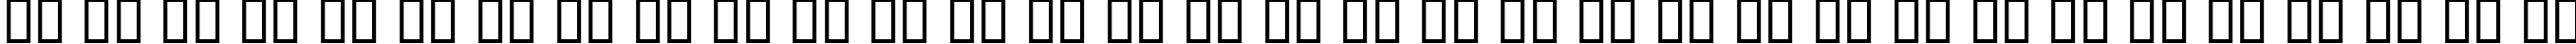 Пример написания русского алфавита шрифтом B Jadid Bold